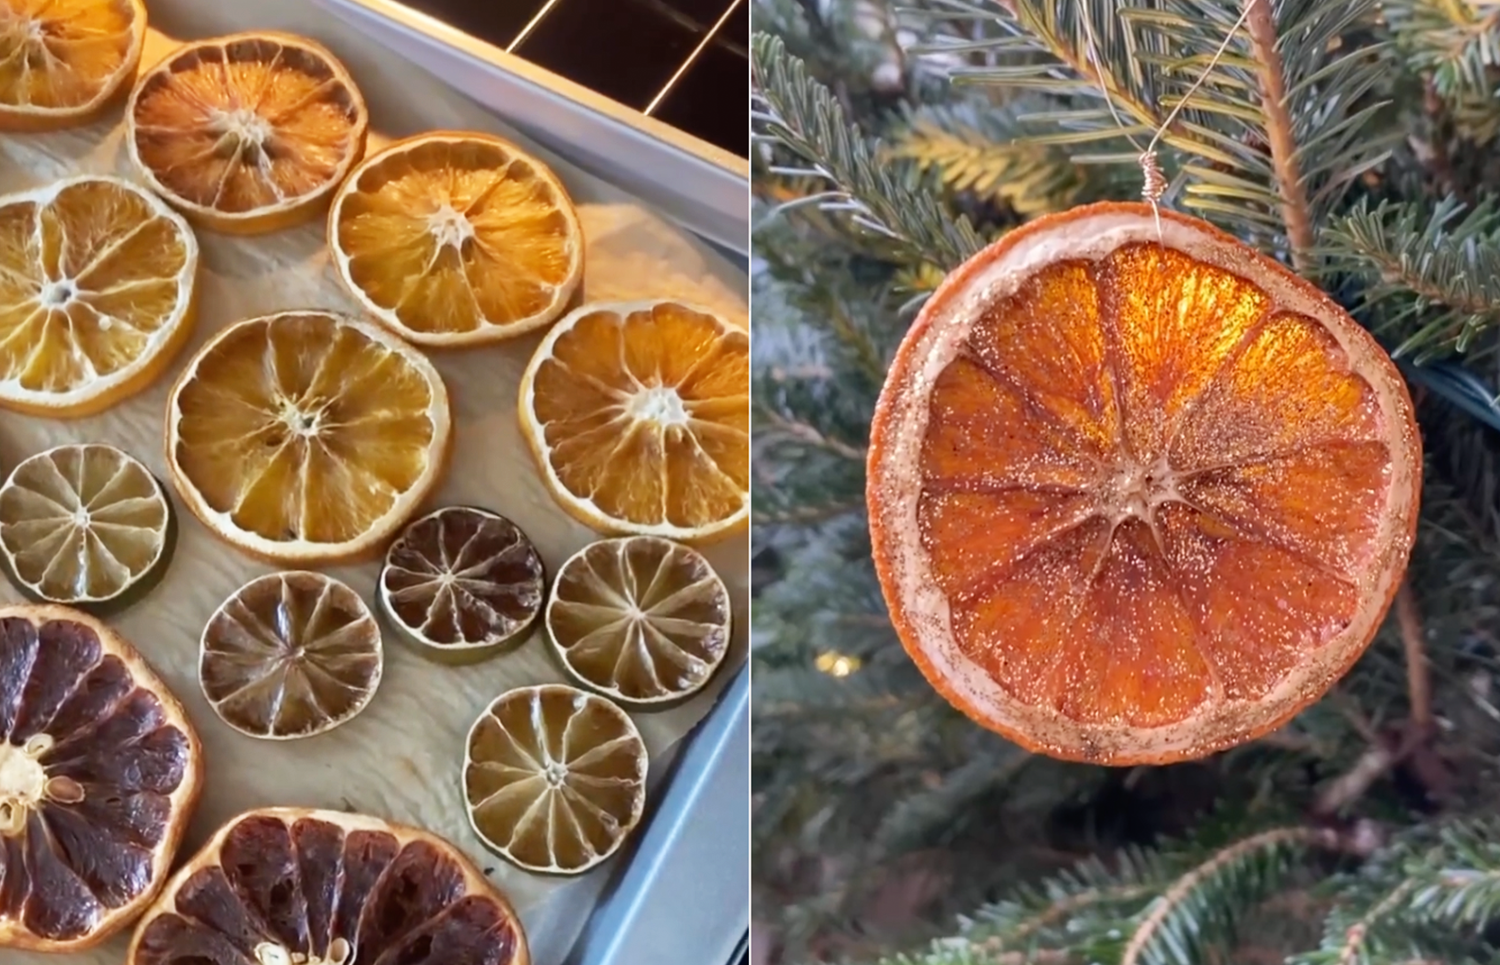 Let's Get Crafty: DIY Citrus Ornaments